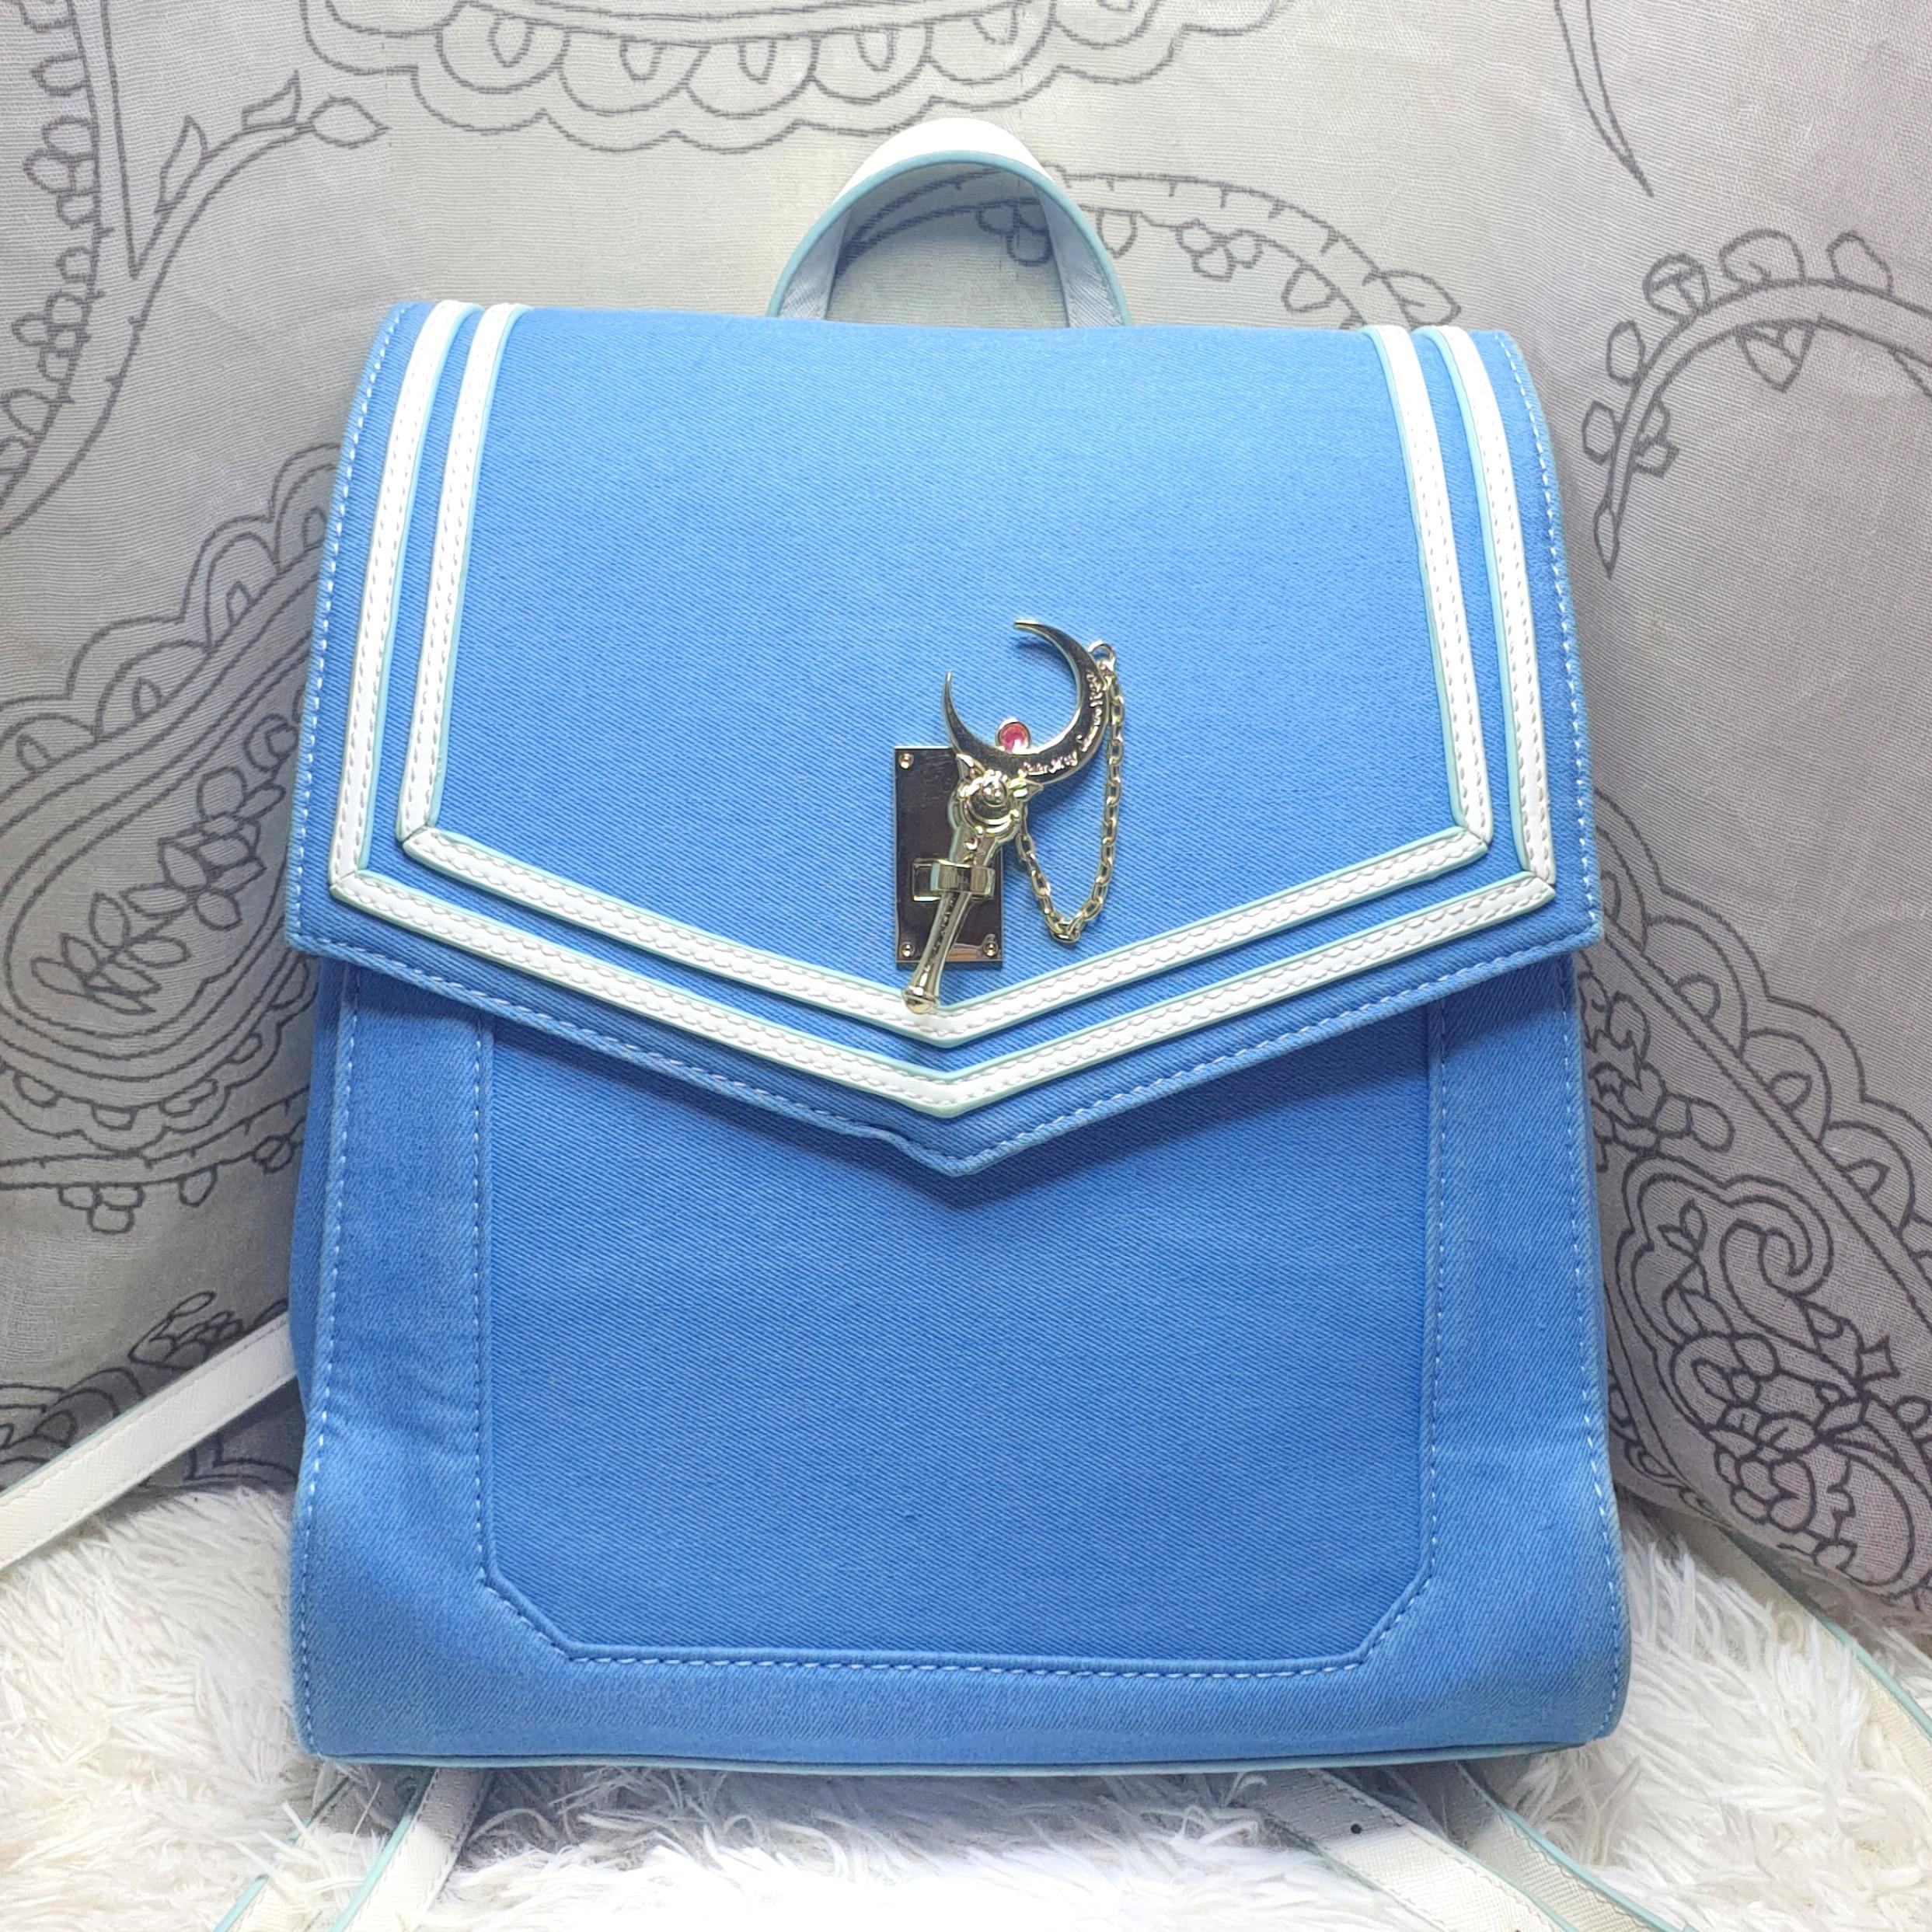 ❤️ Samantha Vega Sailor moon backpack